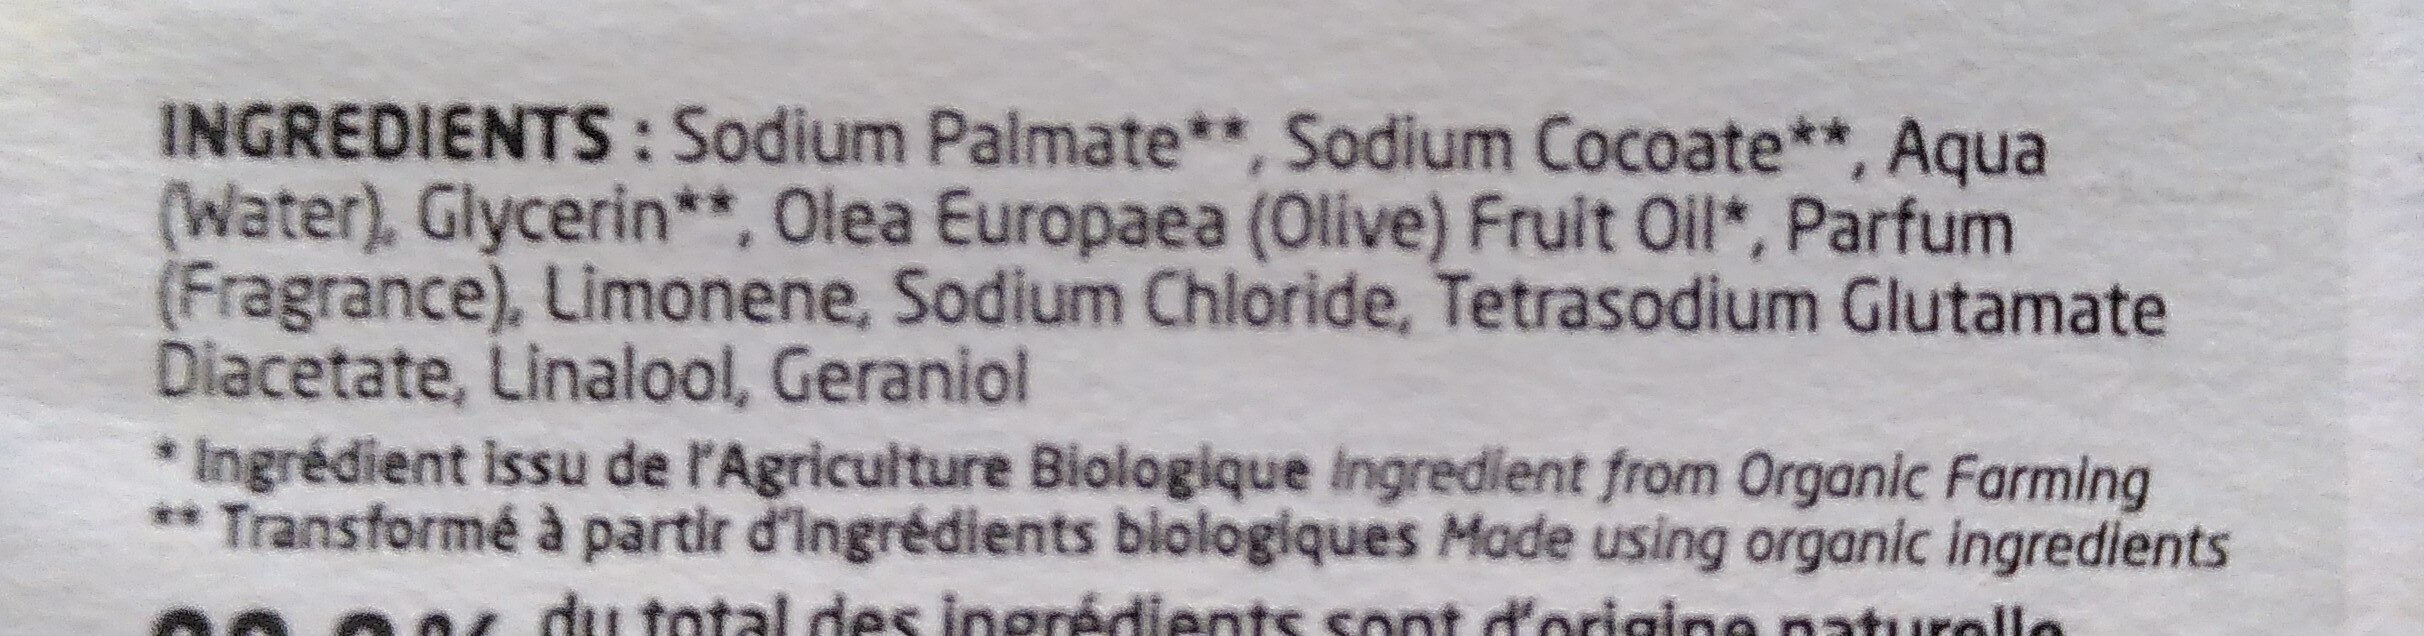 Mon savon douceur - Ingredients - fr